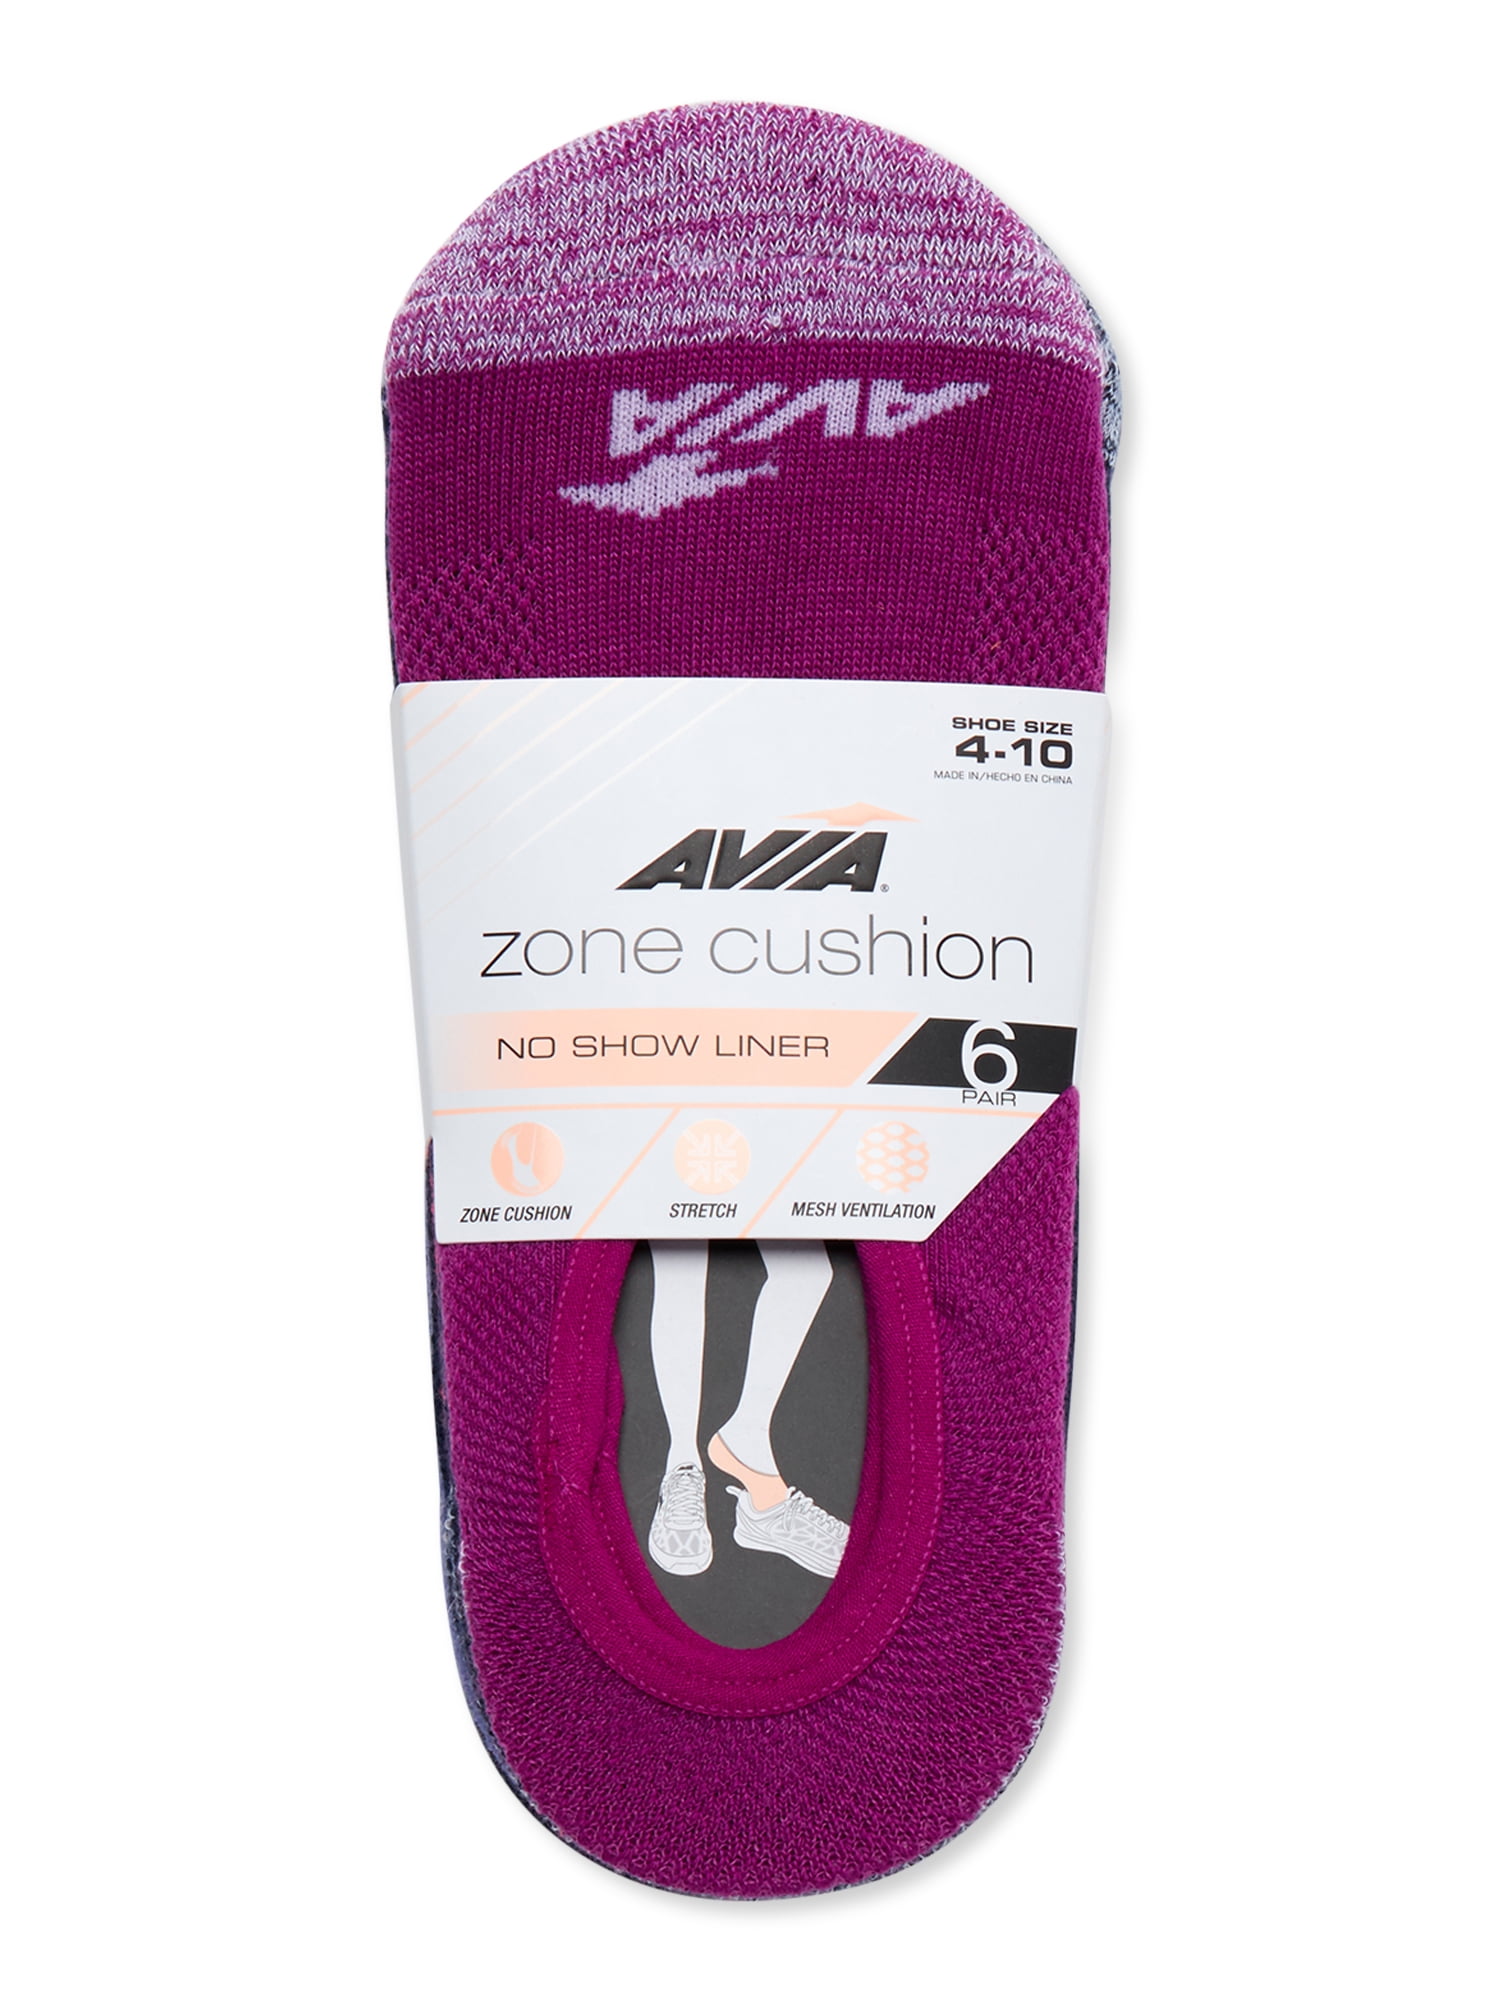 Avia Women's Zoned Cushion No Show Liner Socks, 6 Pack 